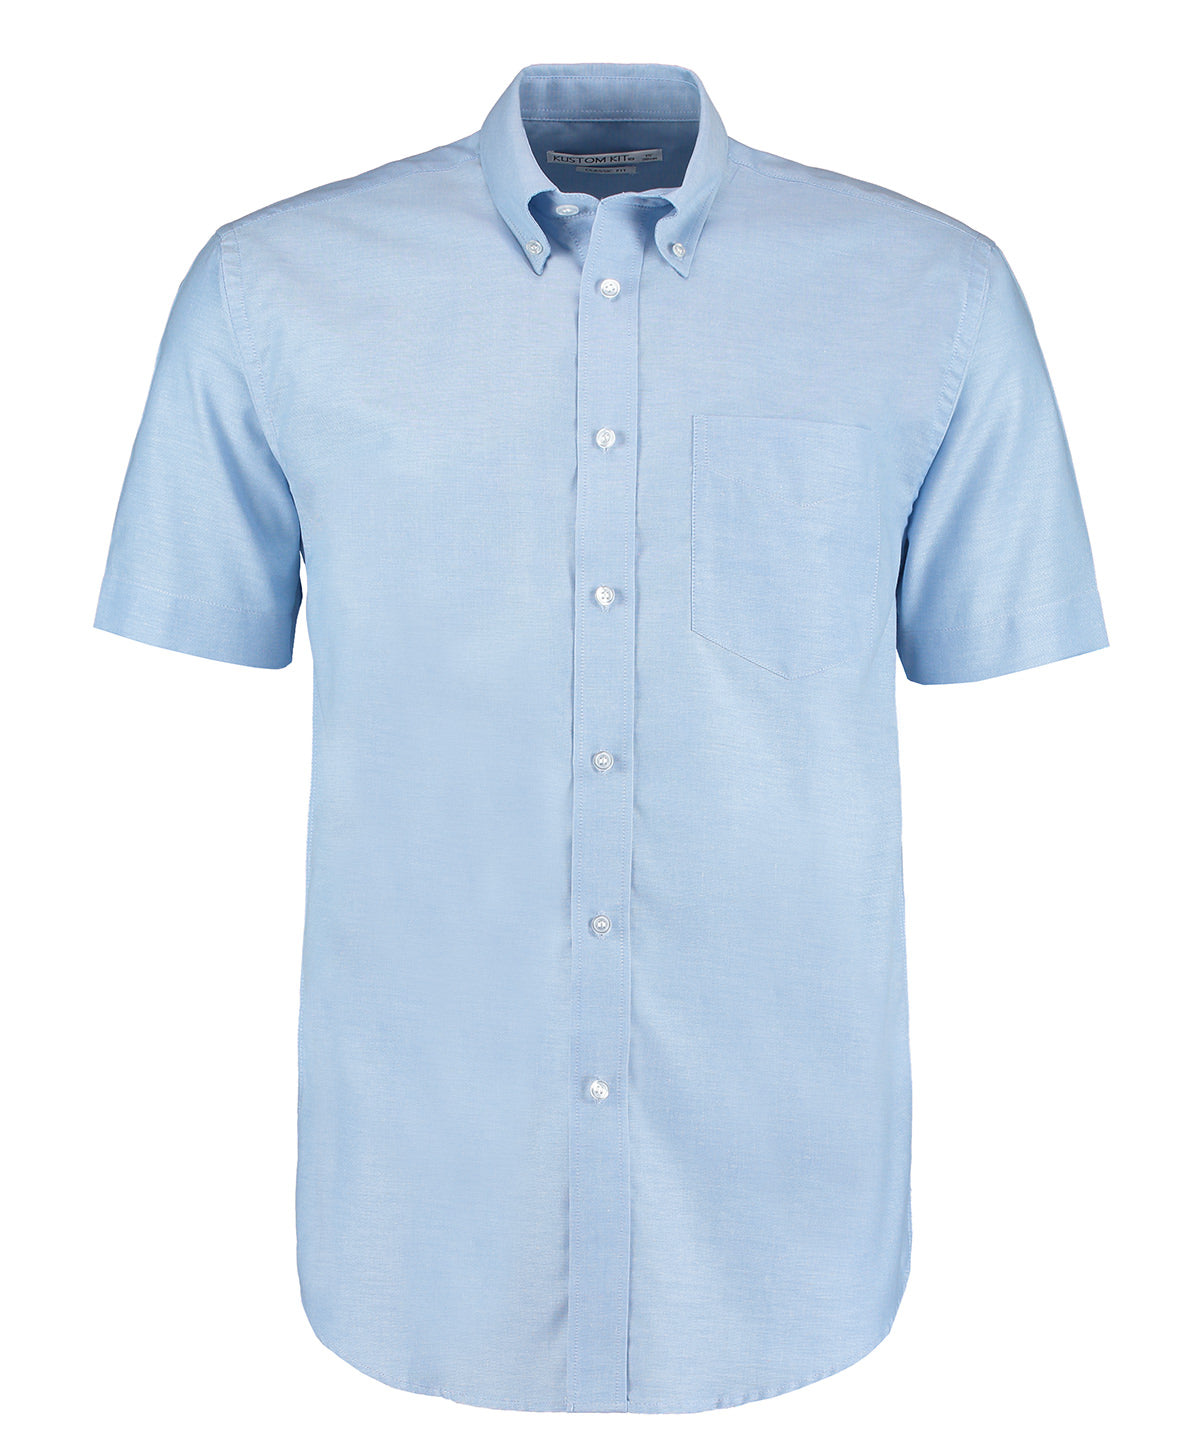 Personalised Shirts - Black Kustom Kit Workplace Oxford shirt short-sleeved (classic fit)